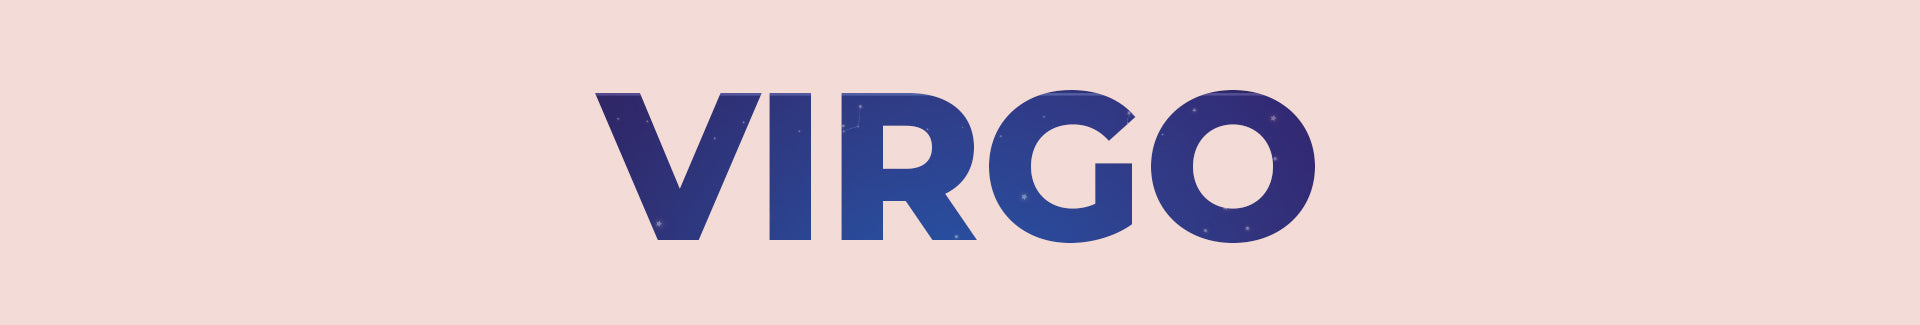 Best Workout For Star Sign: Virgo